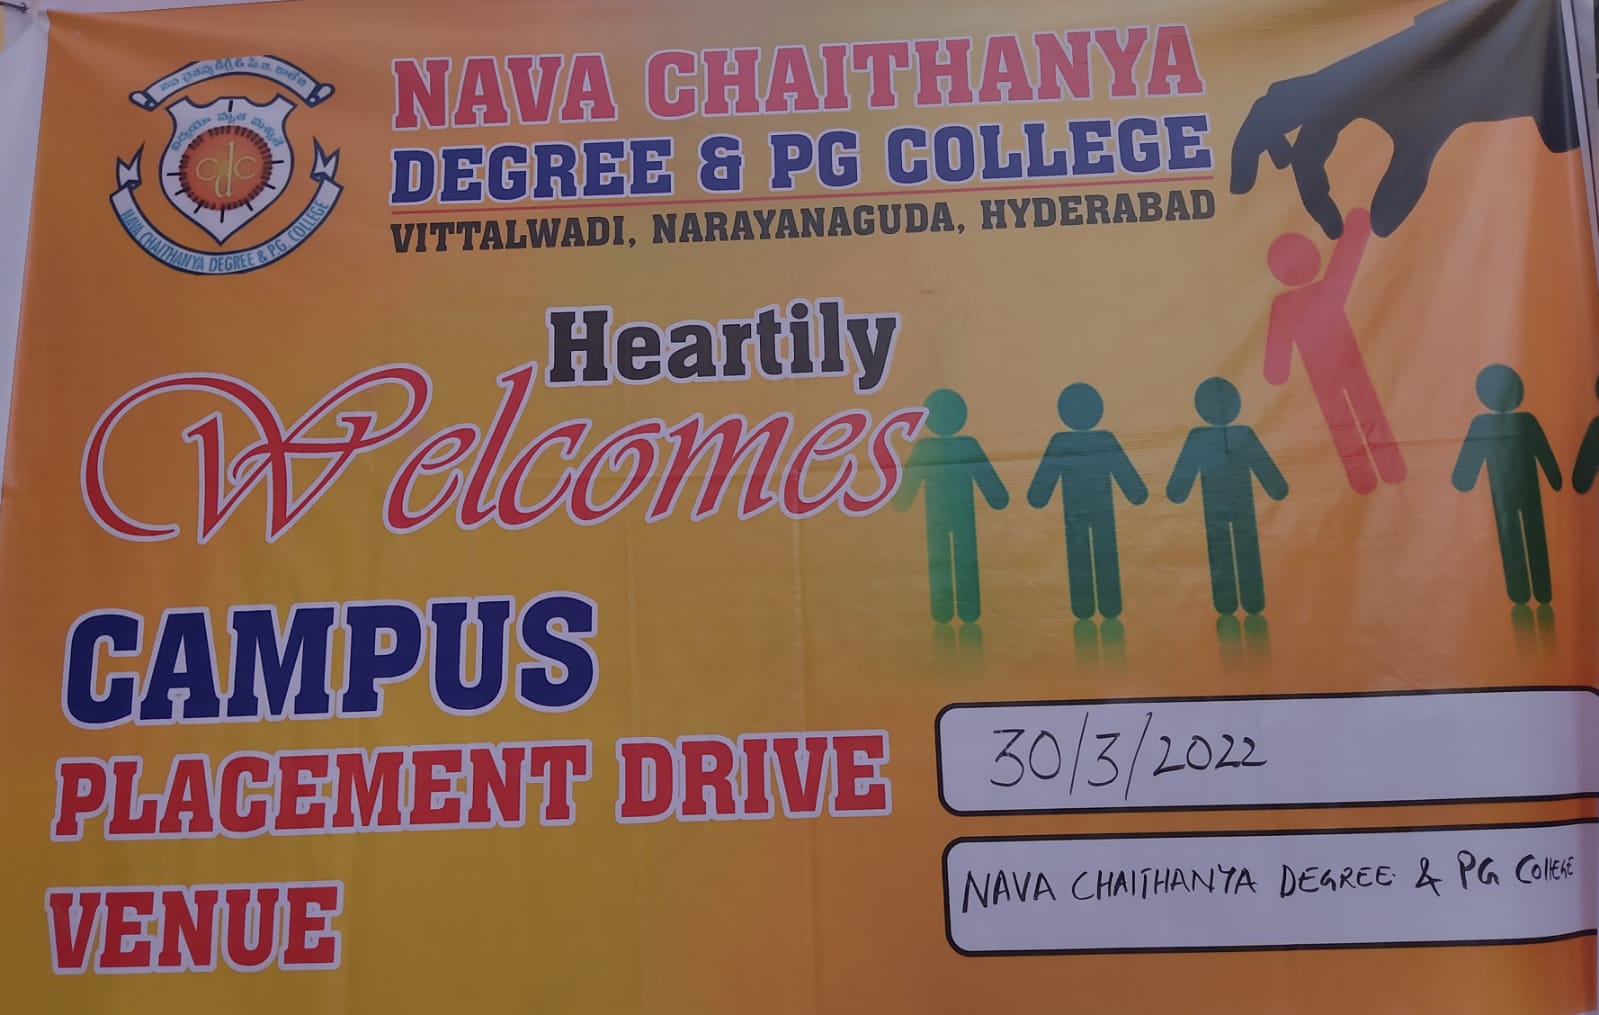 Placement Drive at Nava Chaithanya